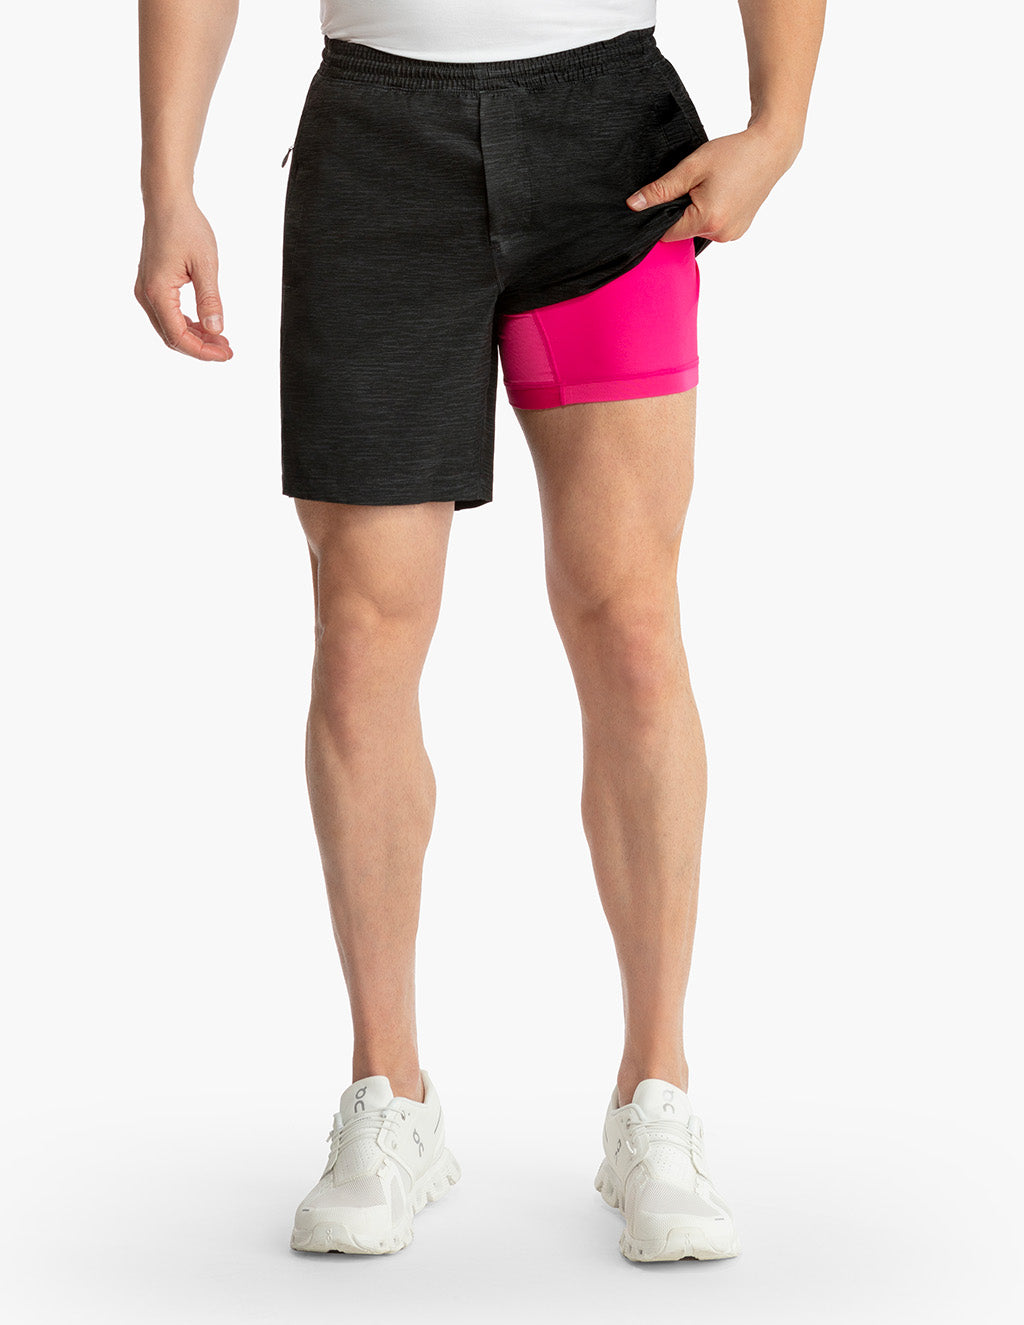 Mack Weldon Brief  Gym shorts womens, Gym women, Womens shorts